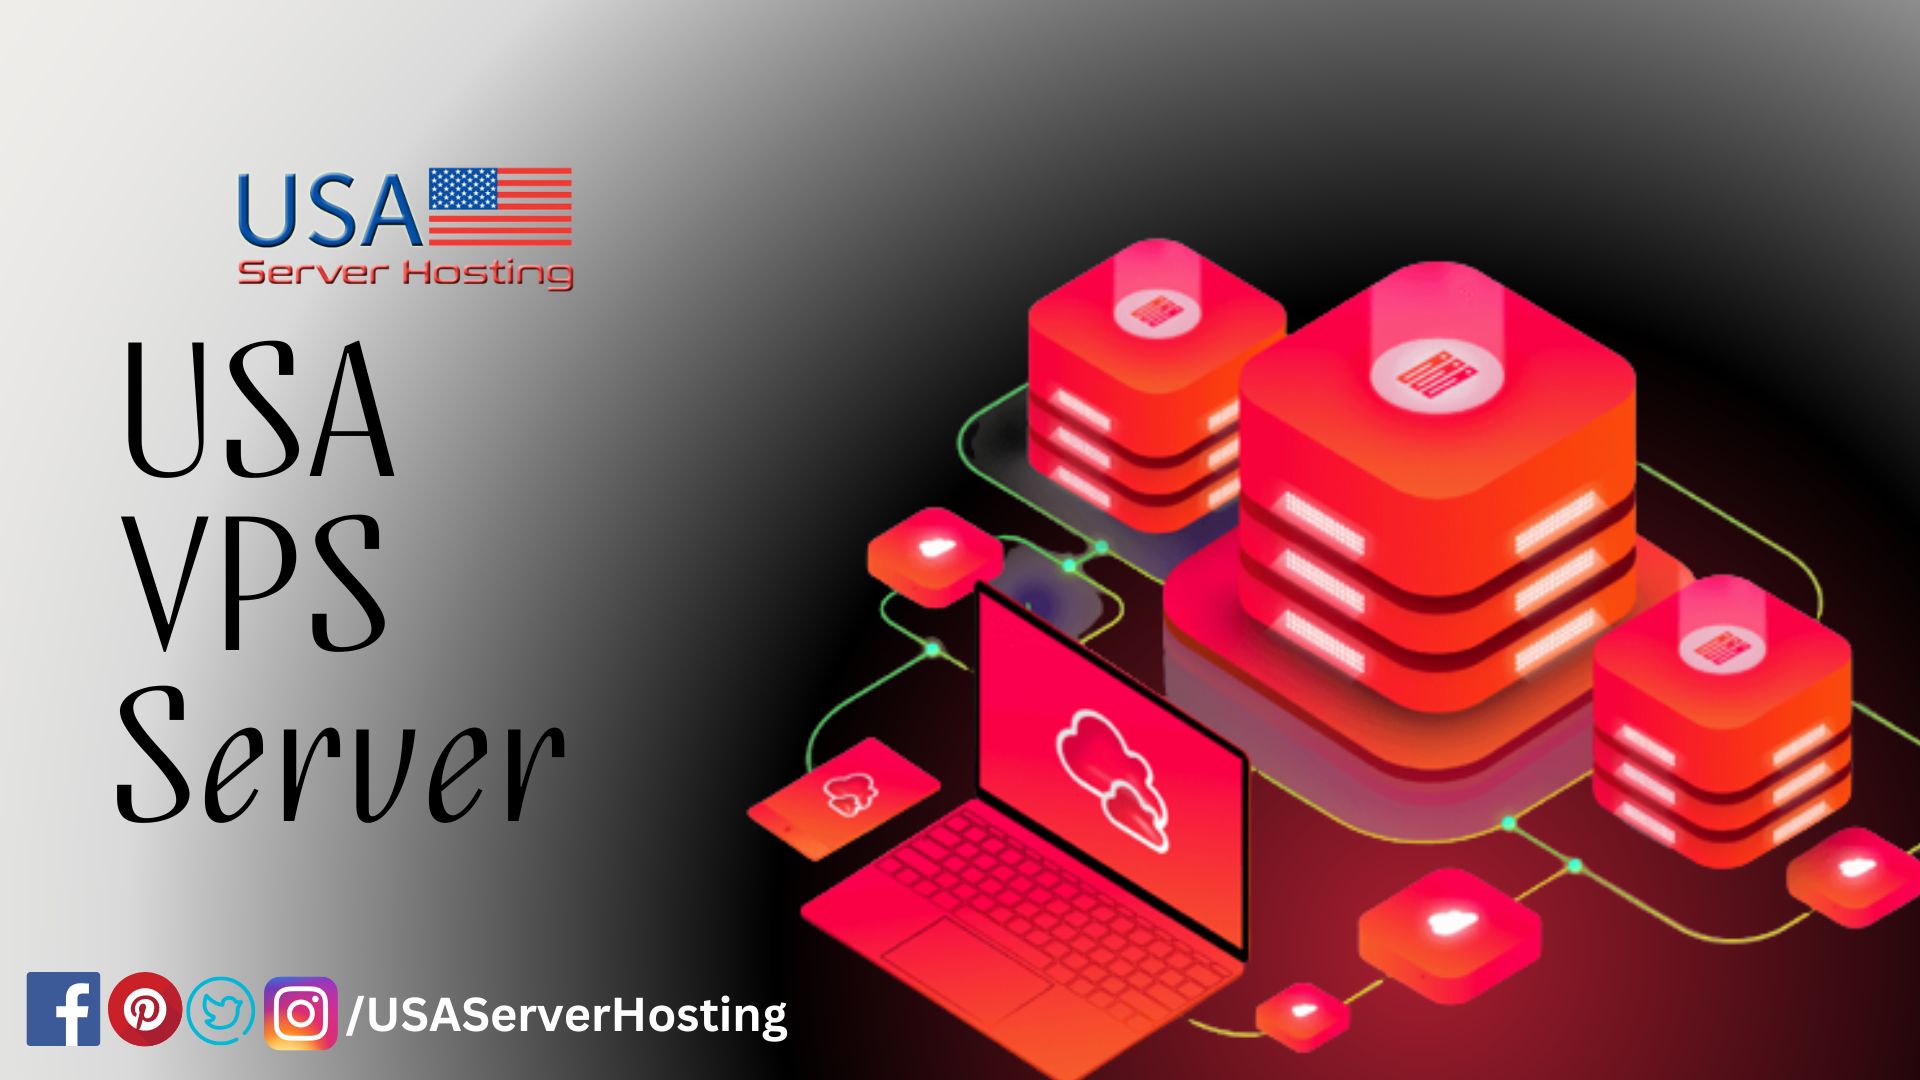 USA VPS Server Experience Lightning-Fast Performance with USA Server Hosting